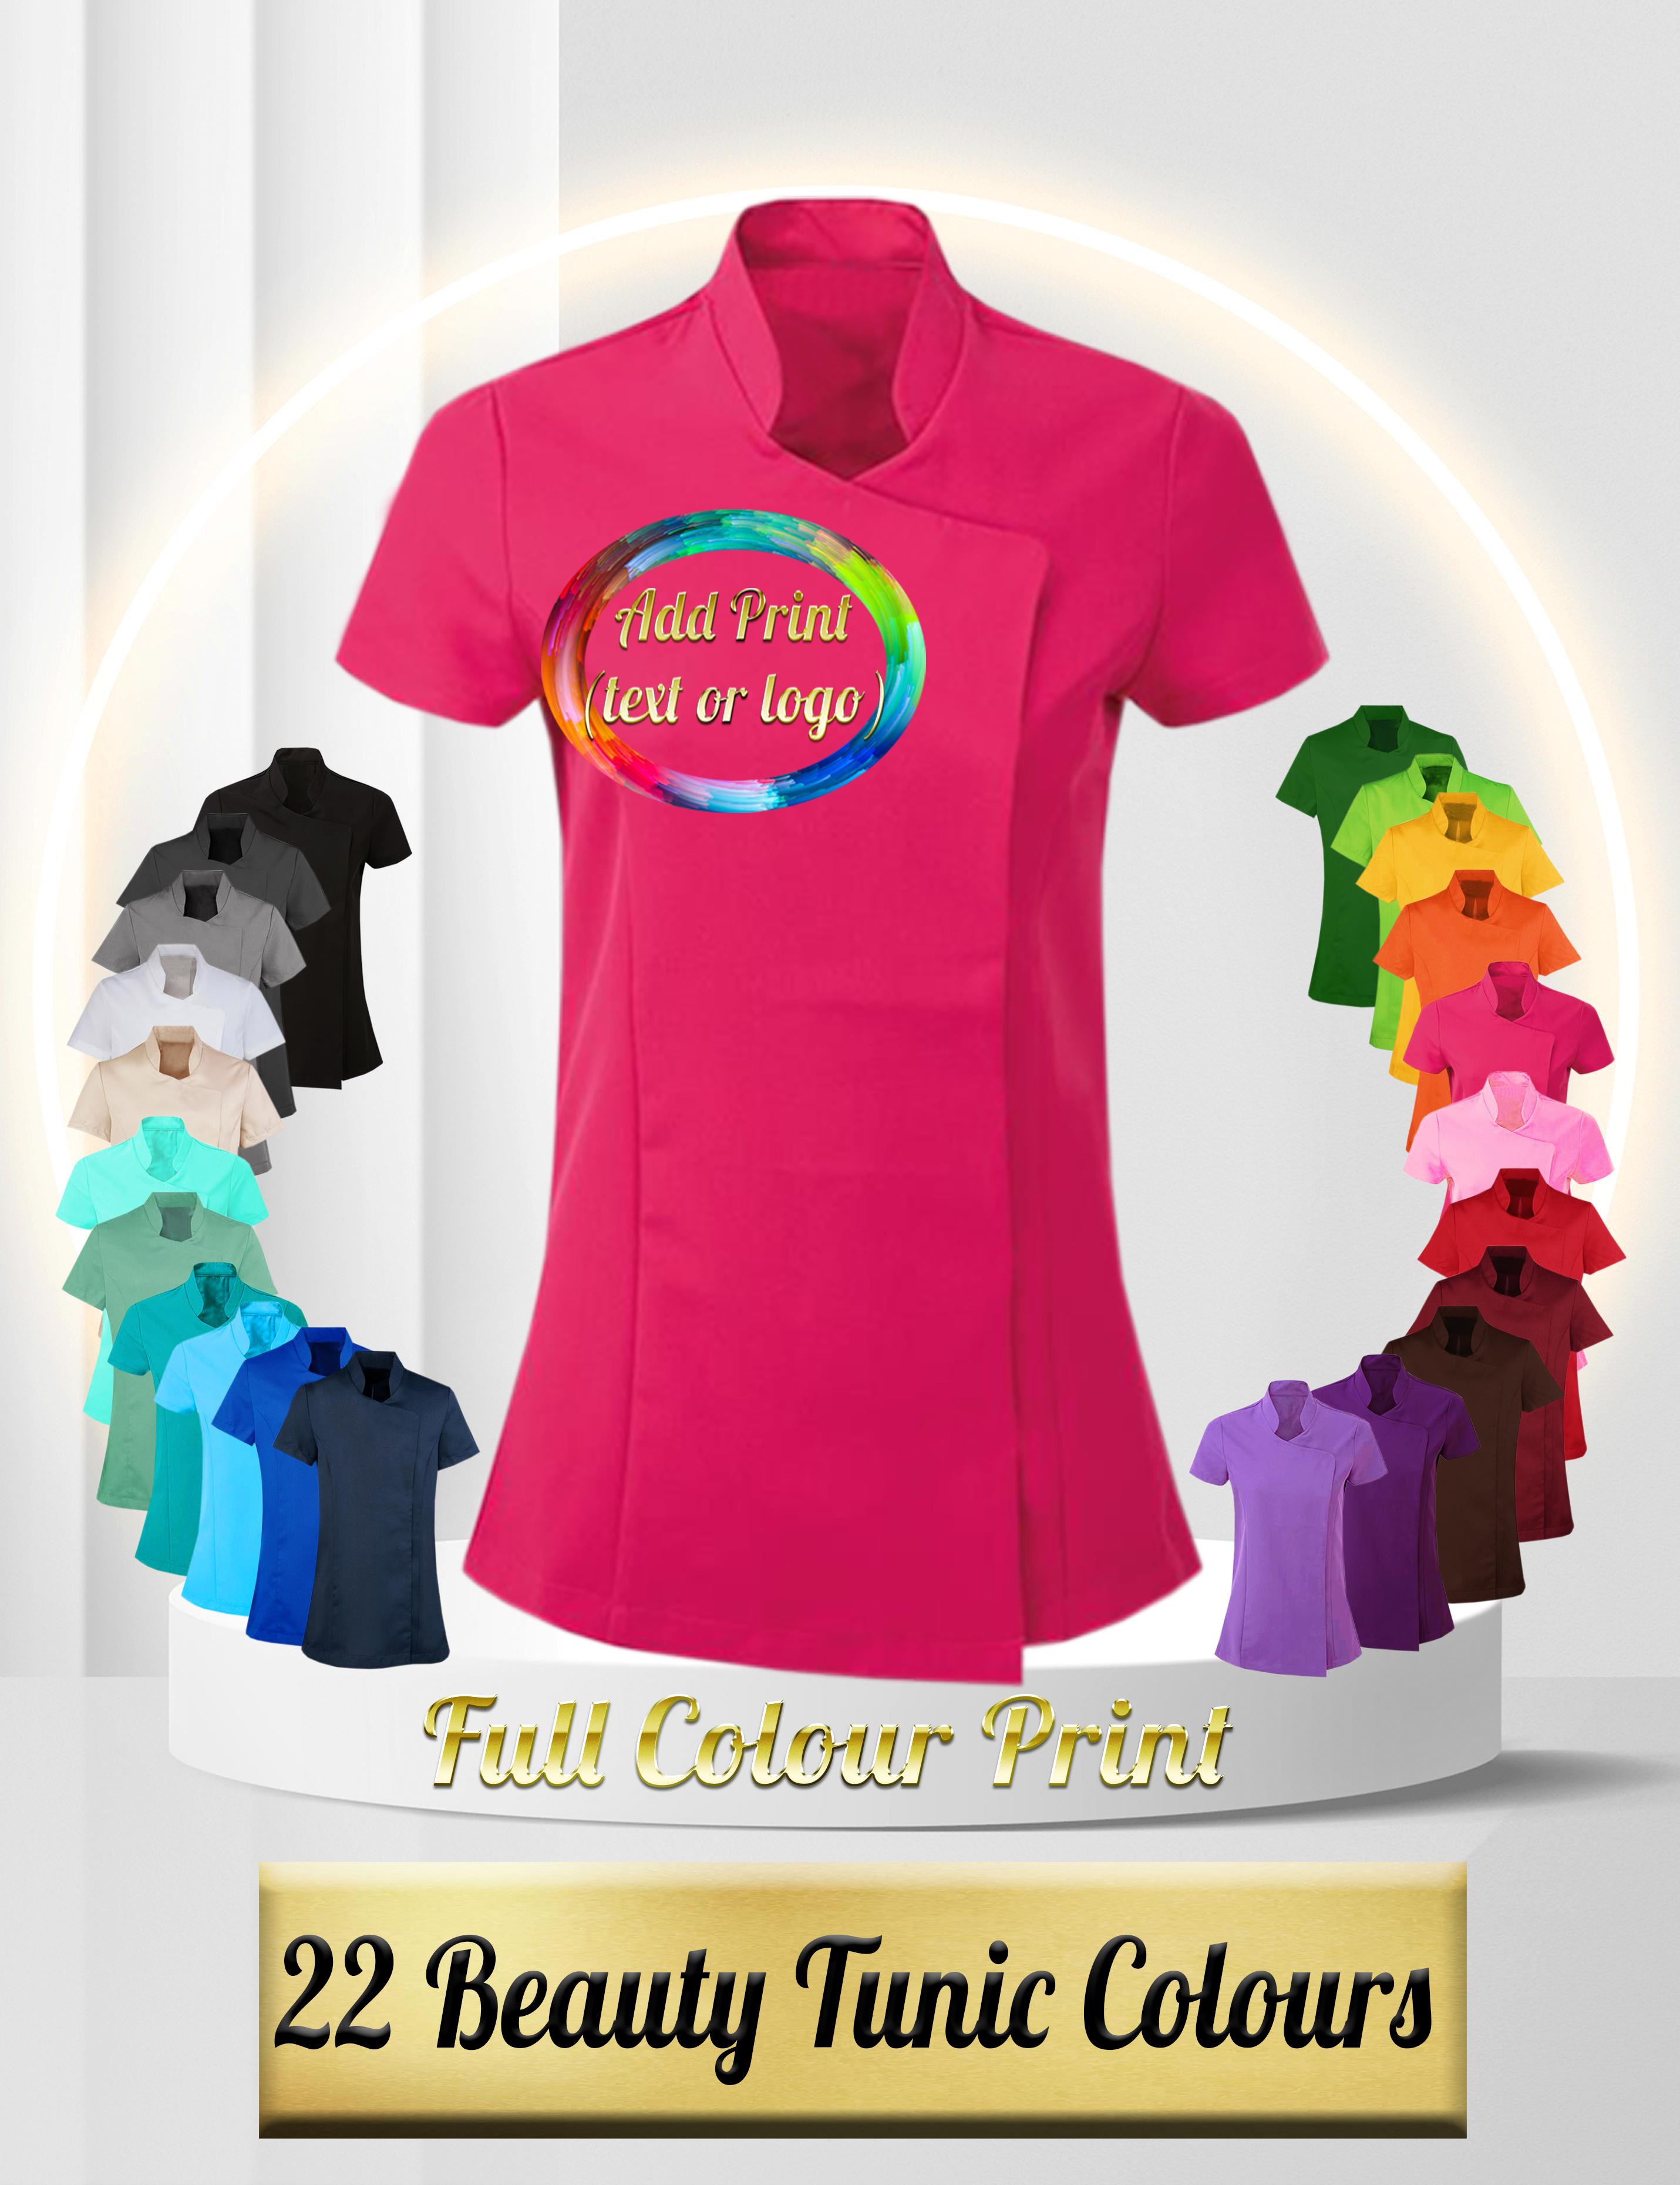 Full colour printed beauty tunic